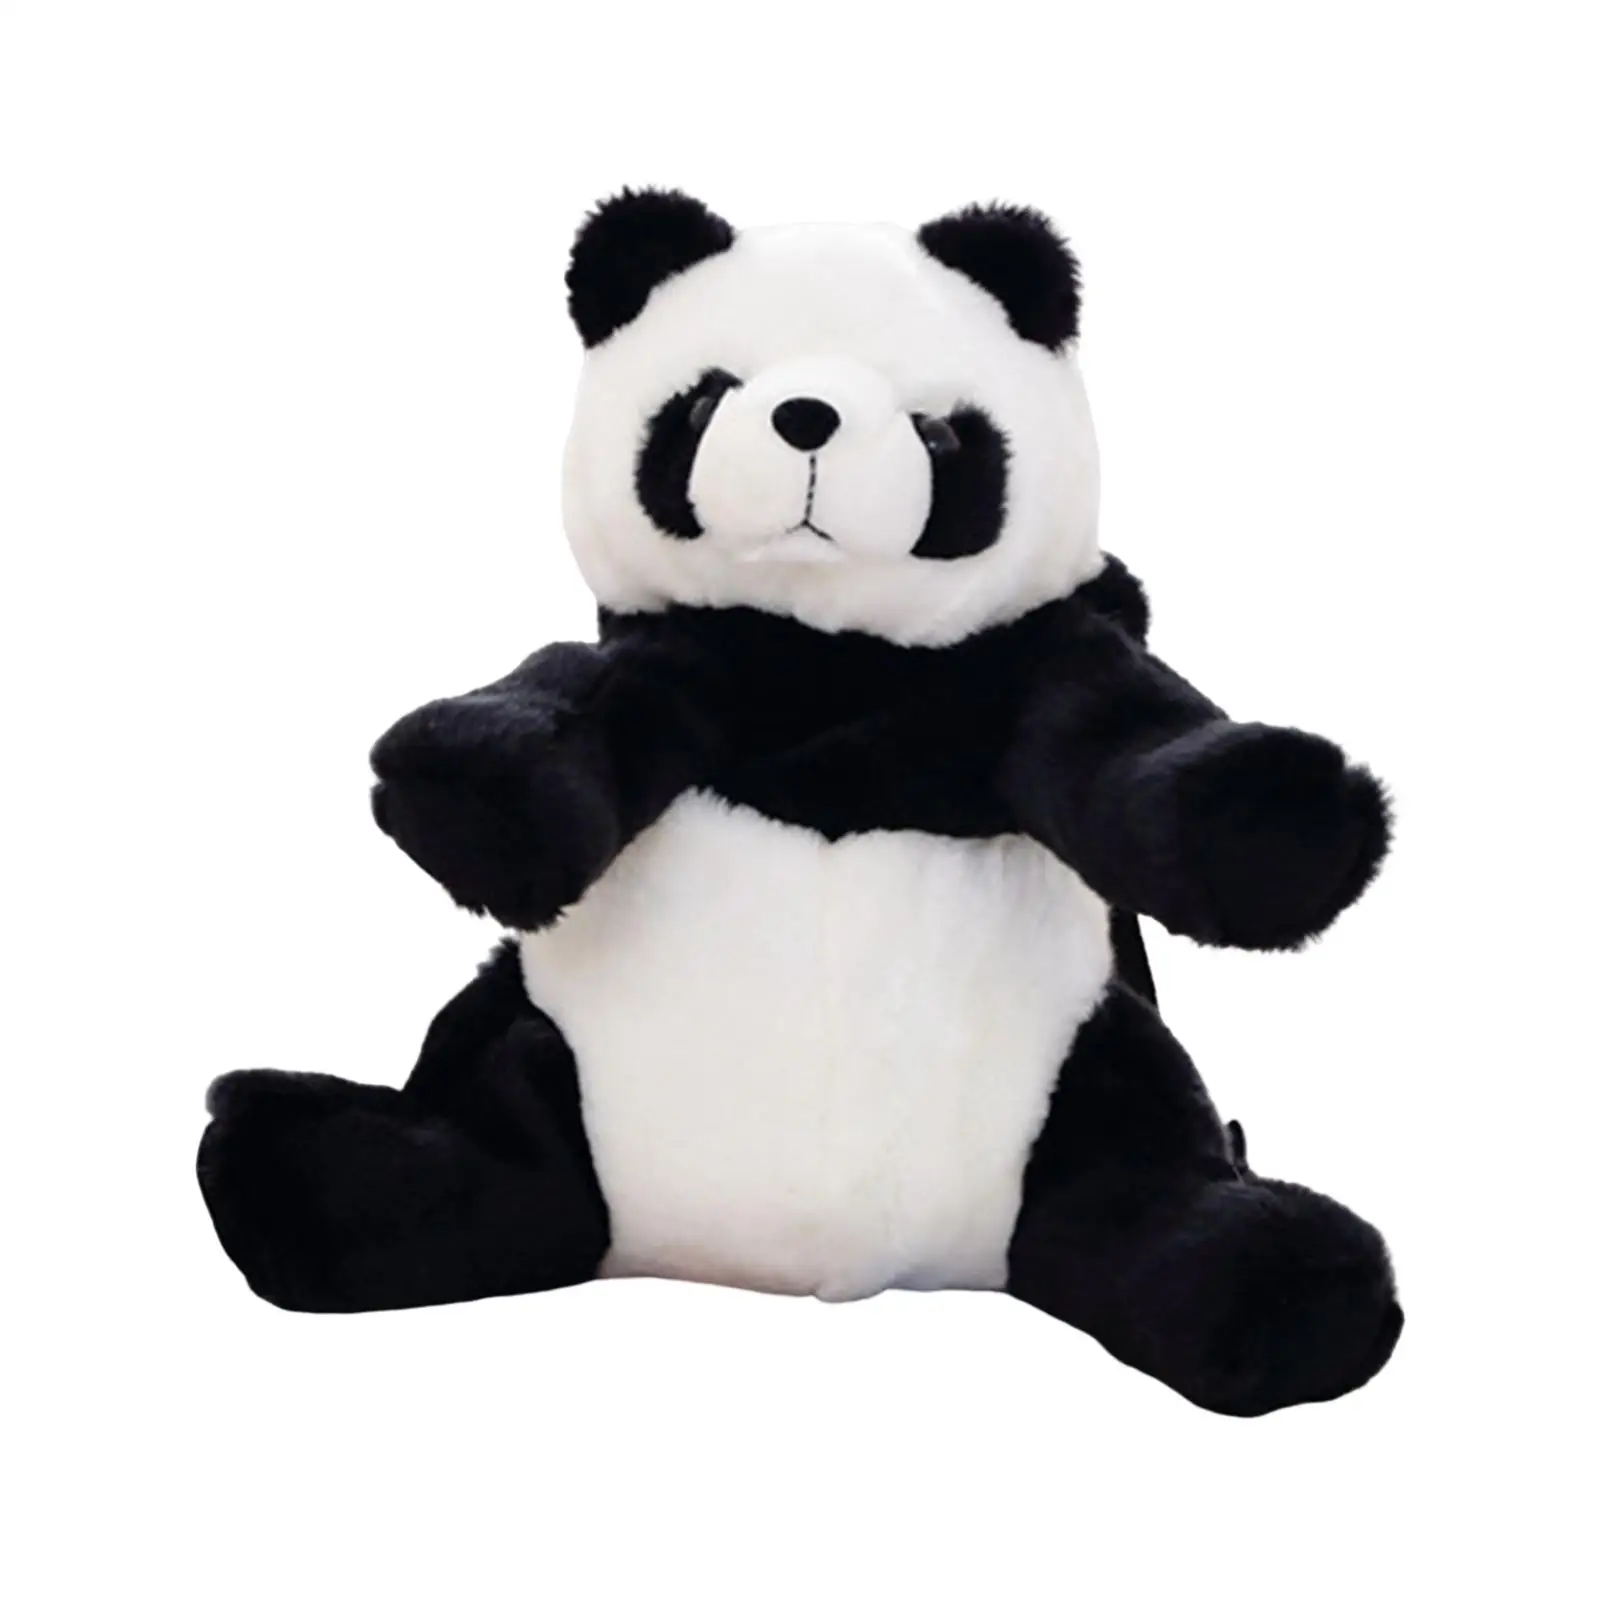 Plush Panda Backpack Large Capacity Stuffed Panda Doll for Girl Unisex Gifts